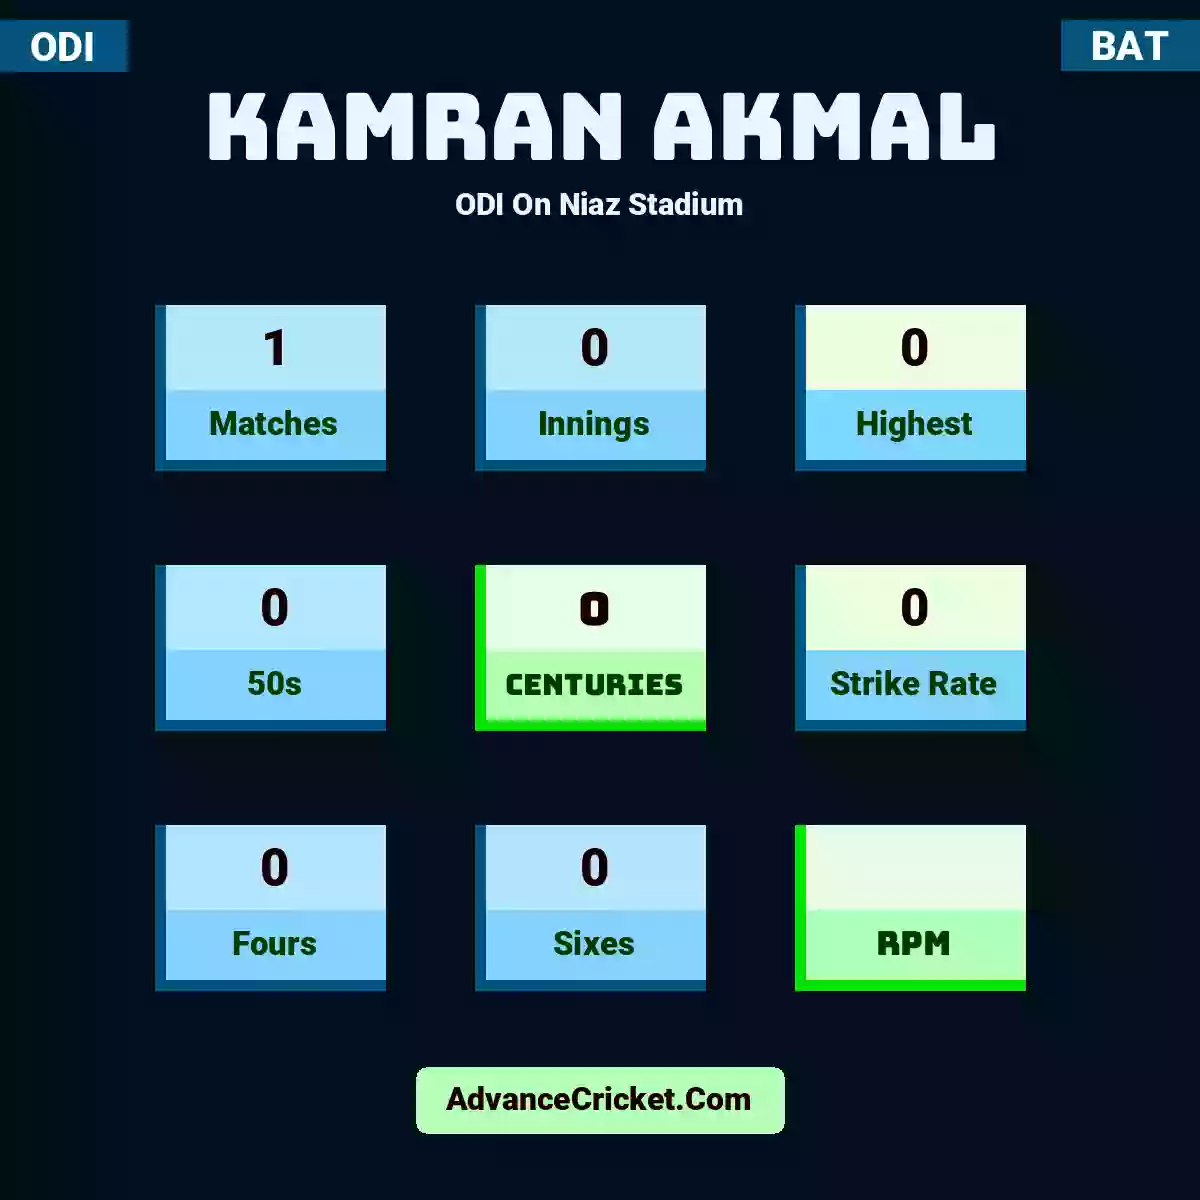 Kamran Akmal ODI  On Niaz Stadium, Kamran Akmal played 1 matches, scored 0 runs as highest, 0 half-centuries, and 0 centuries, with a strike rate of 0. K.Akmal hit 0 fours and 0 sixes.